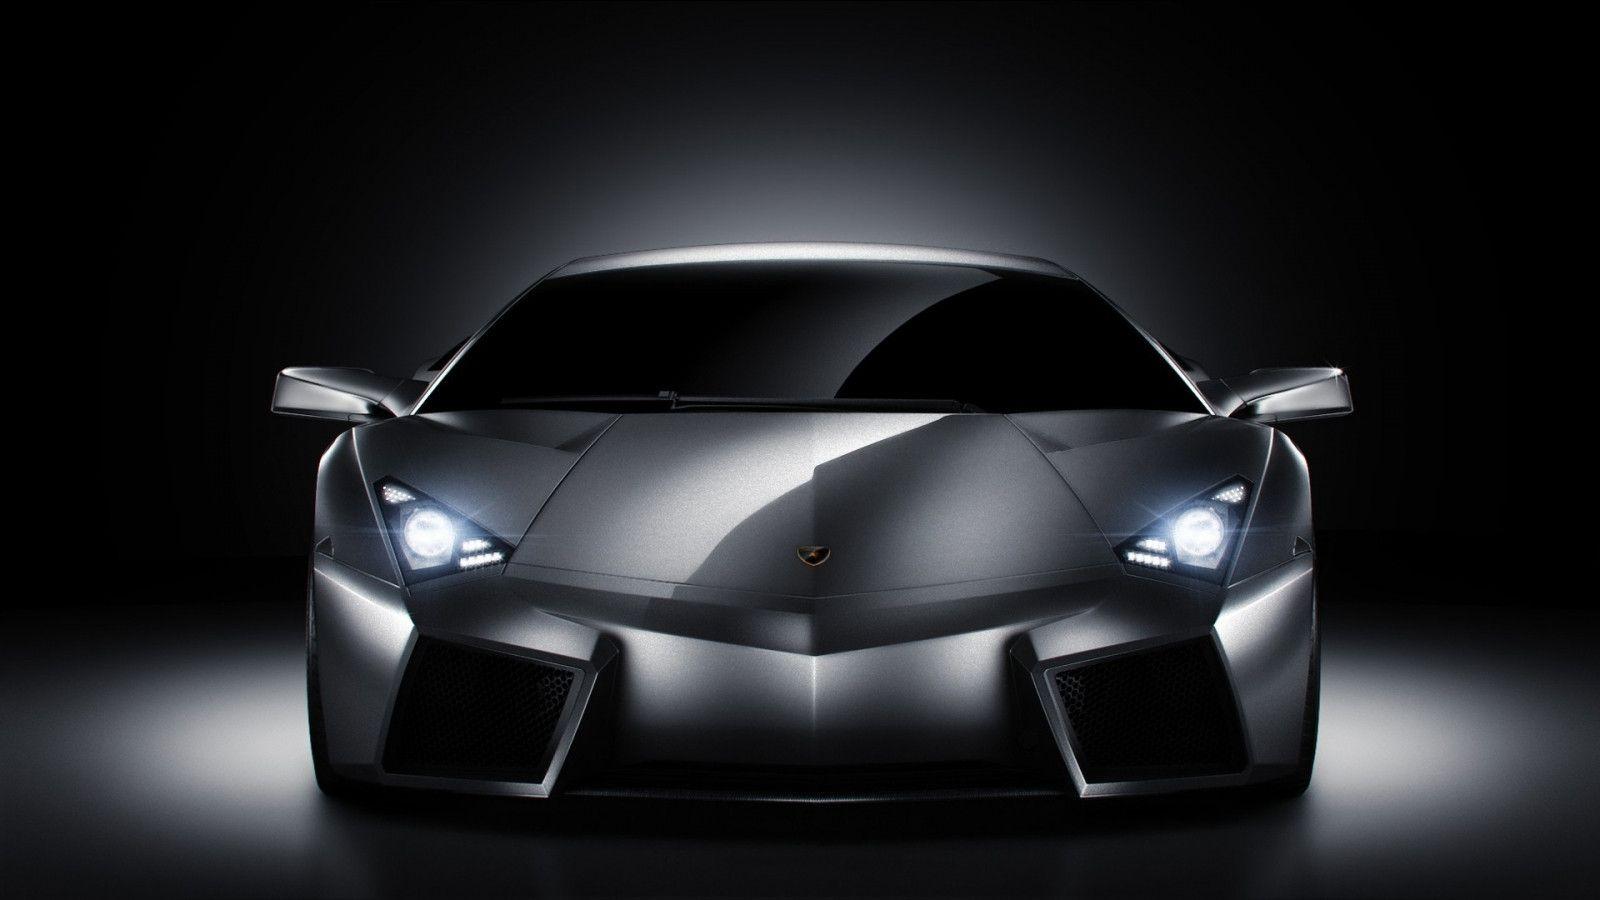 image For > Lamborghini HD Wallpaper 1080p On Road